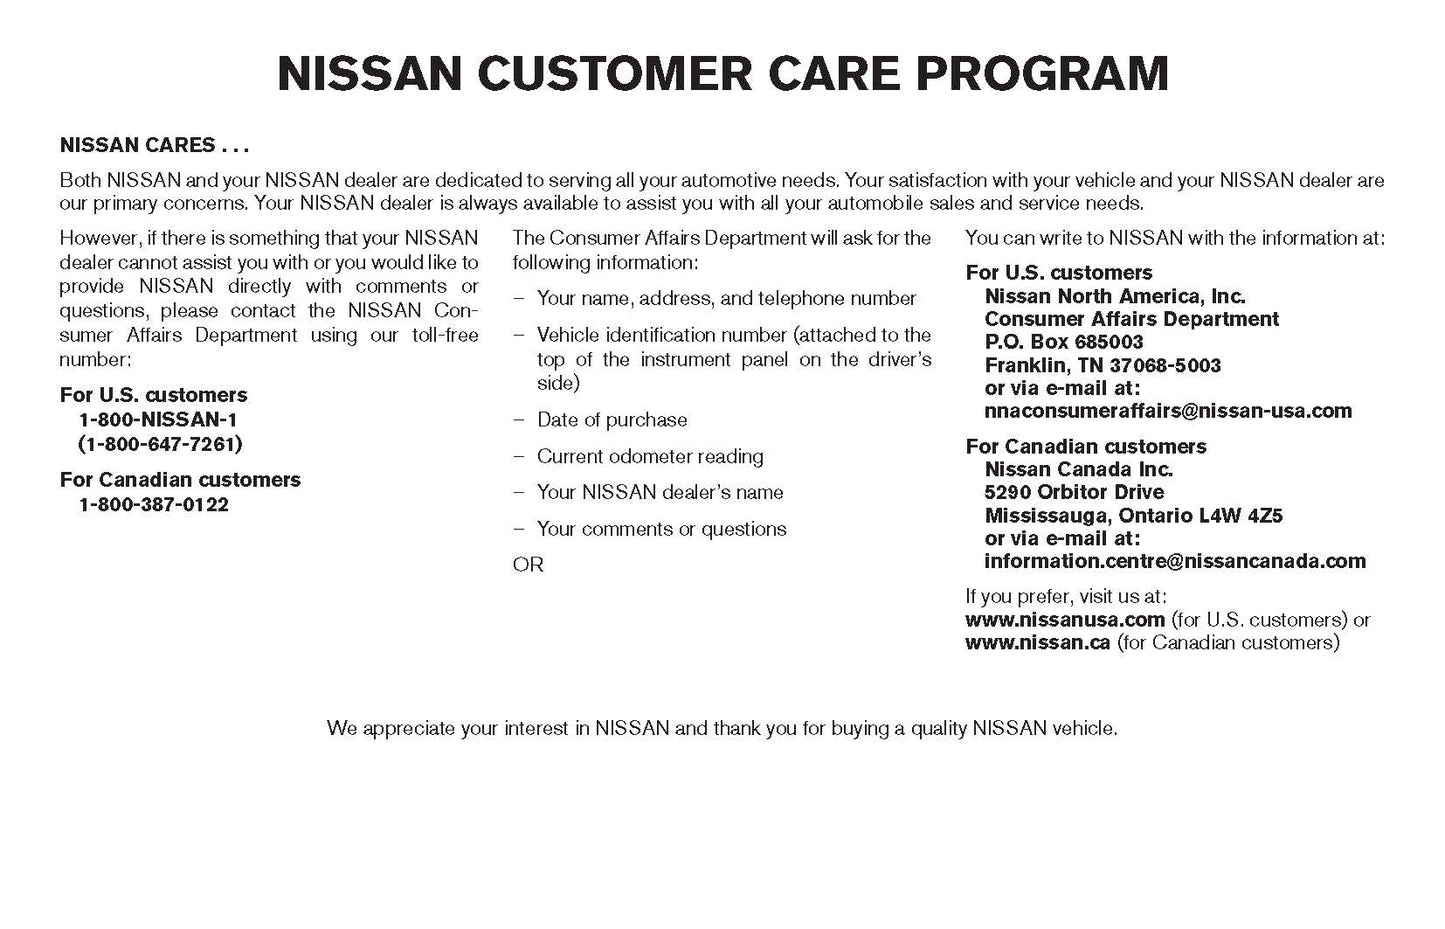 2017 Nissan Rogue Bedienungsanleitung | Englisch